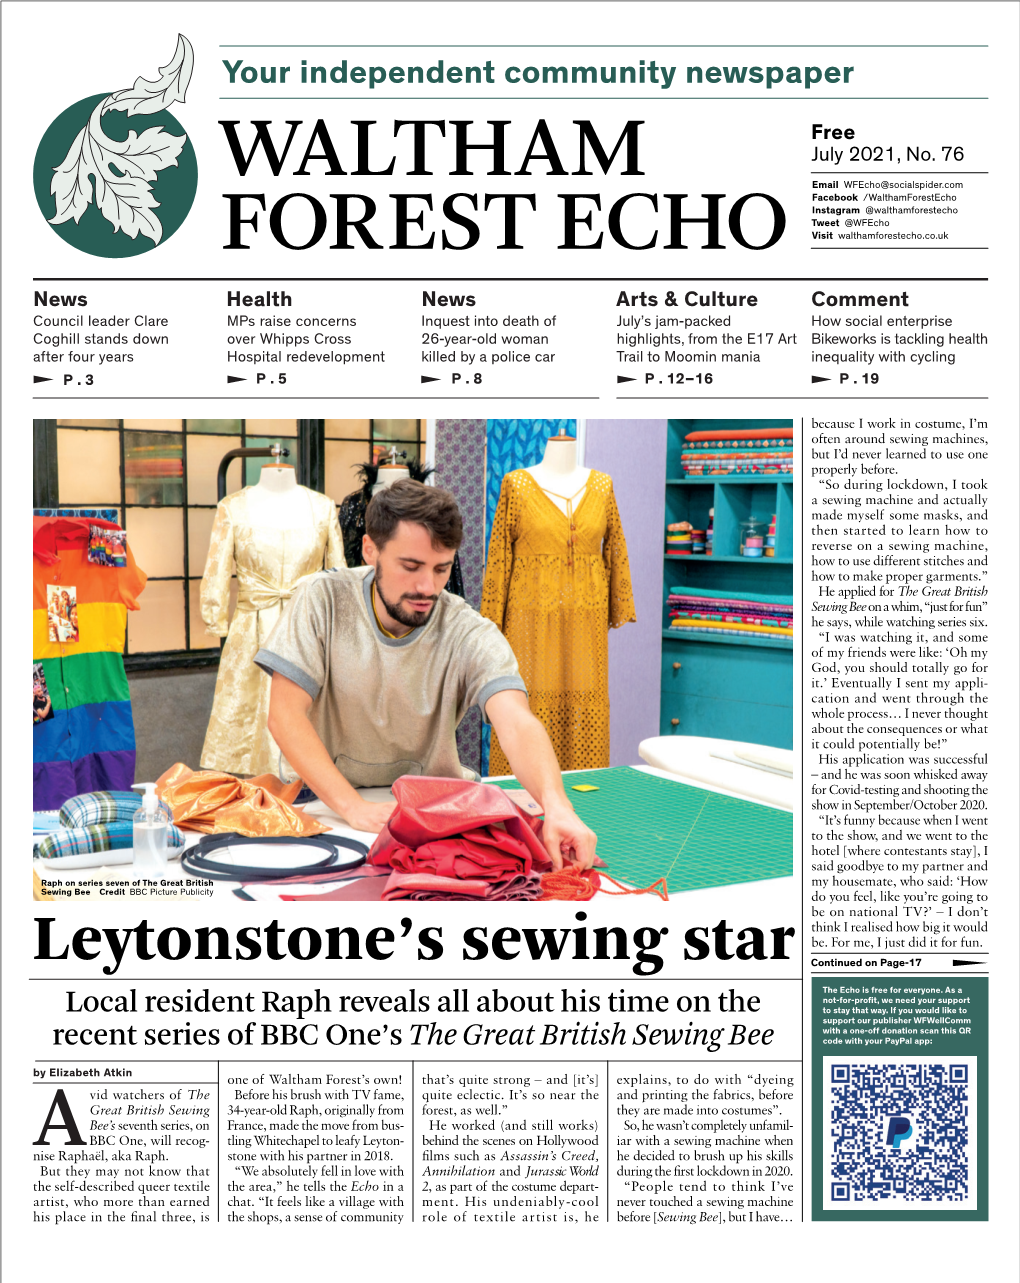 Leytonstone's Sewing Star